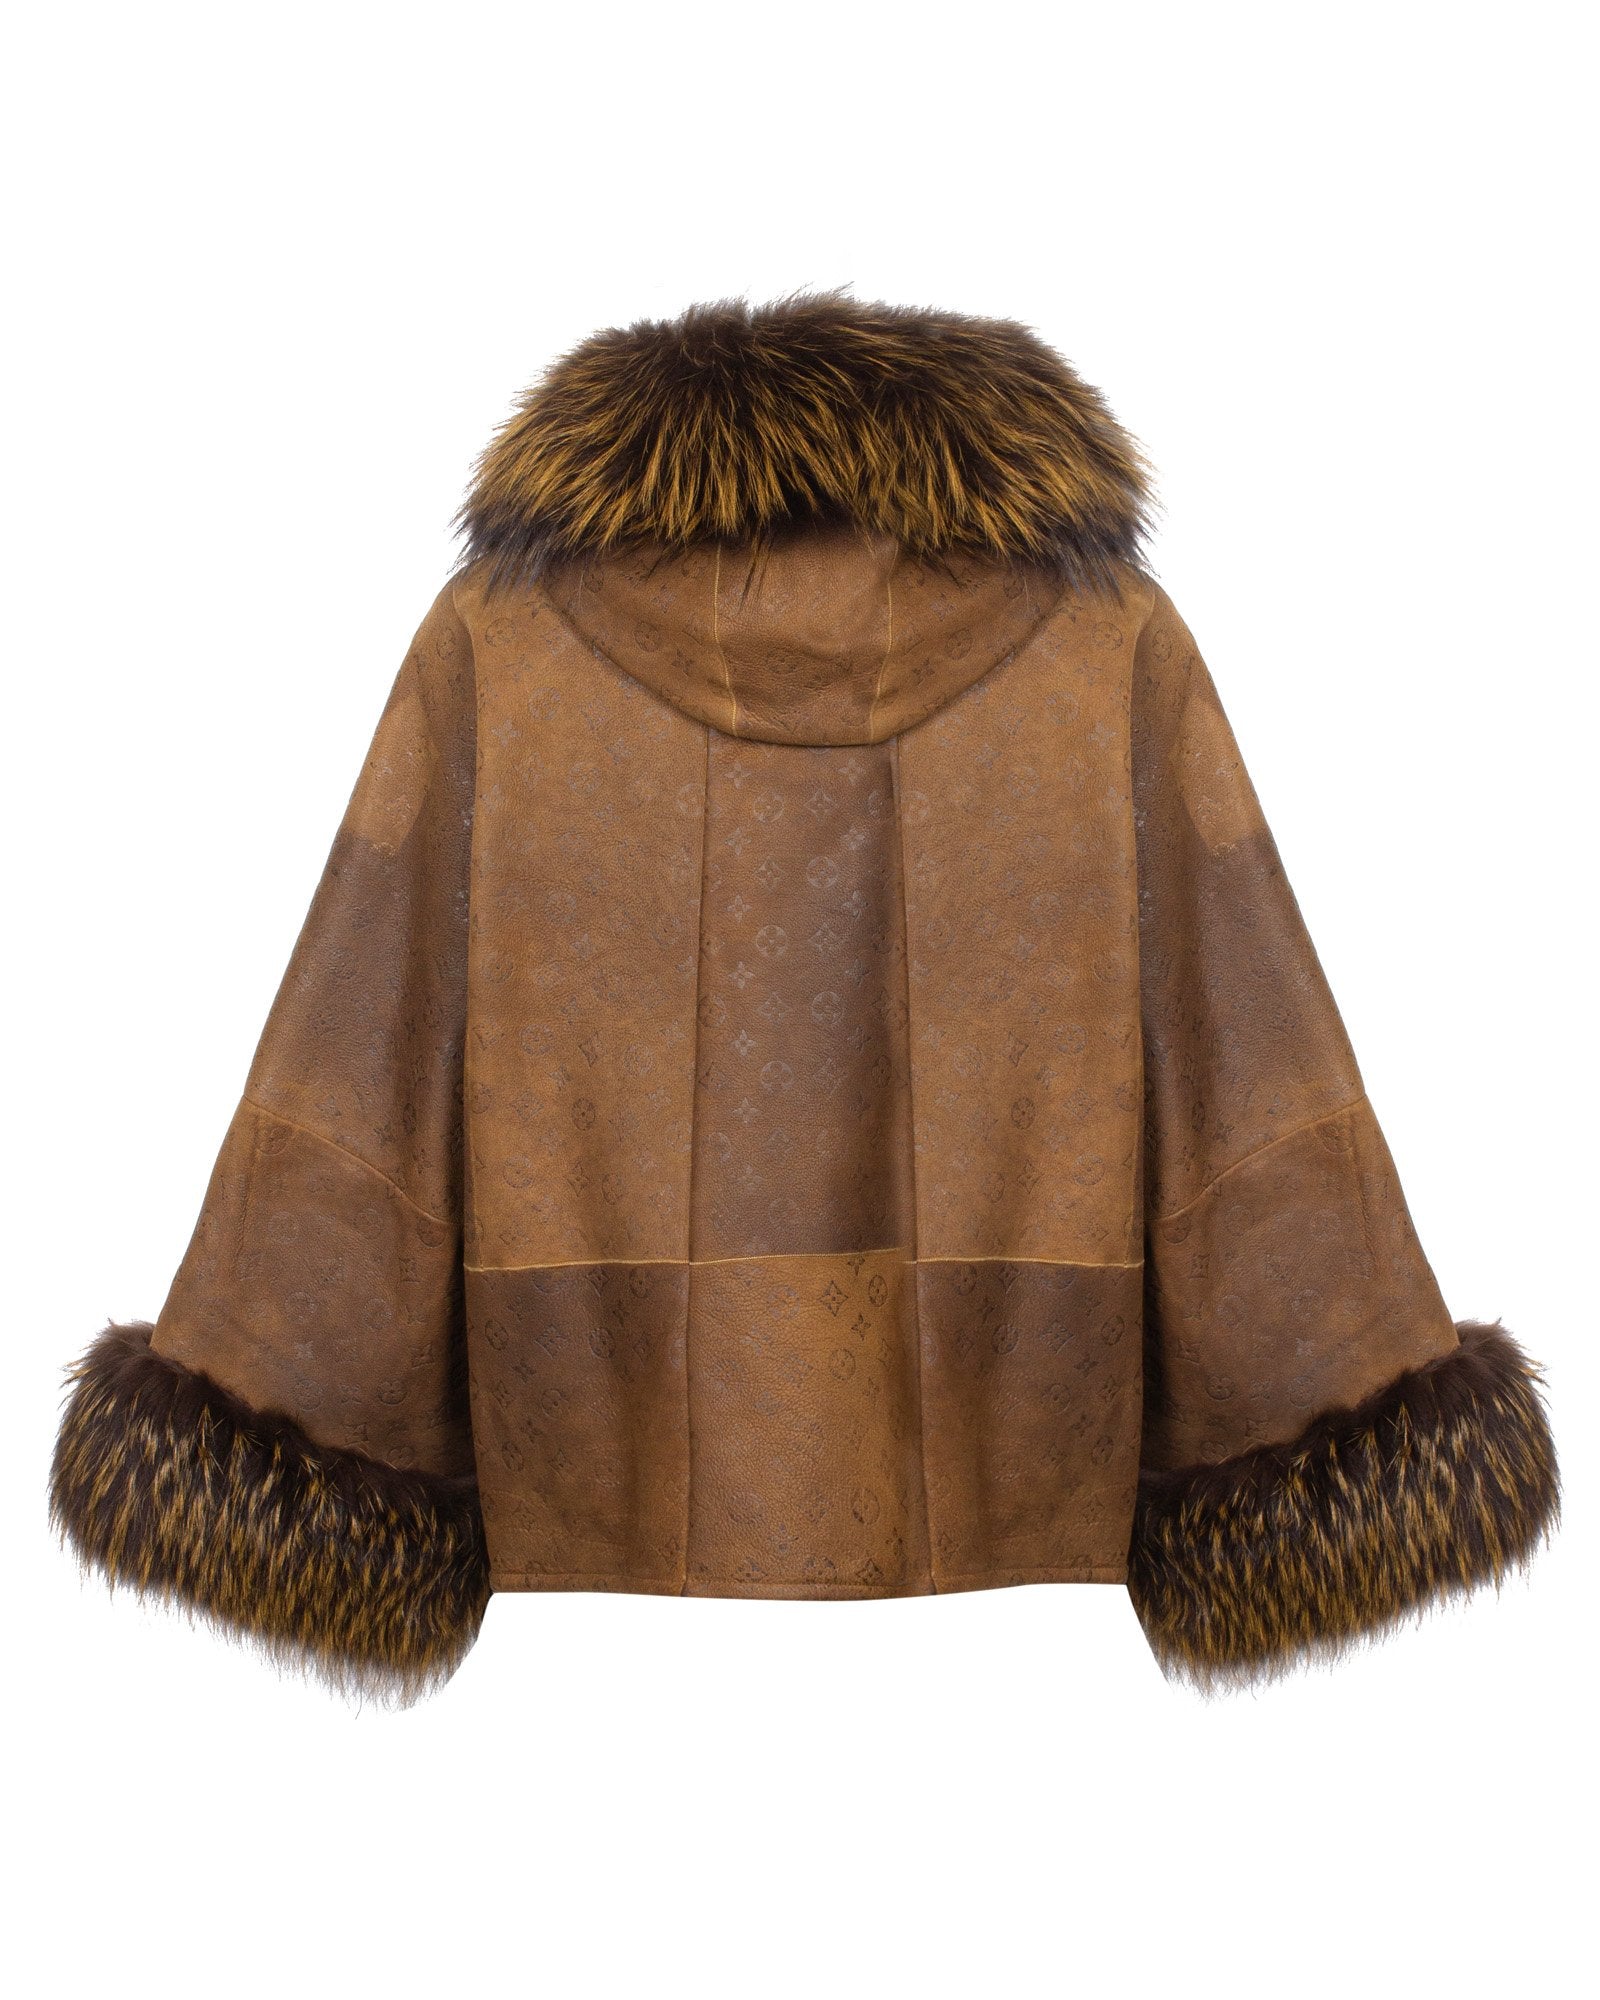 Tan Leather Coat